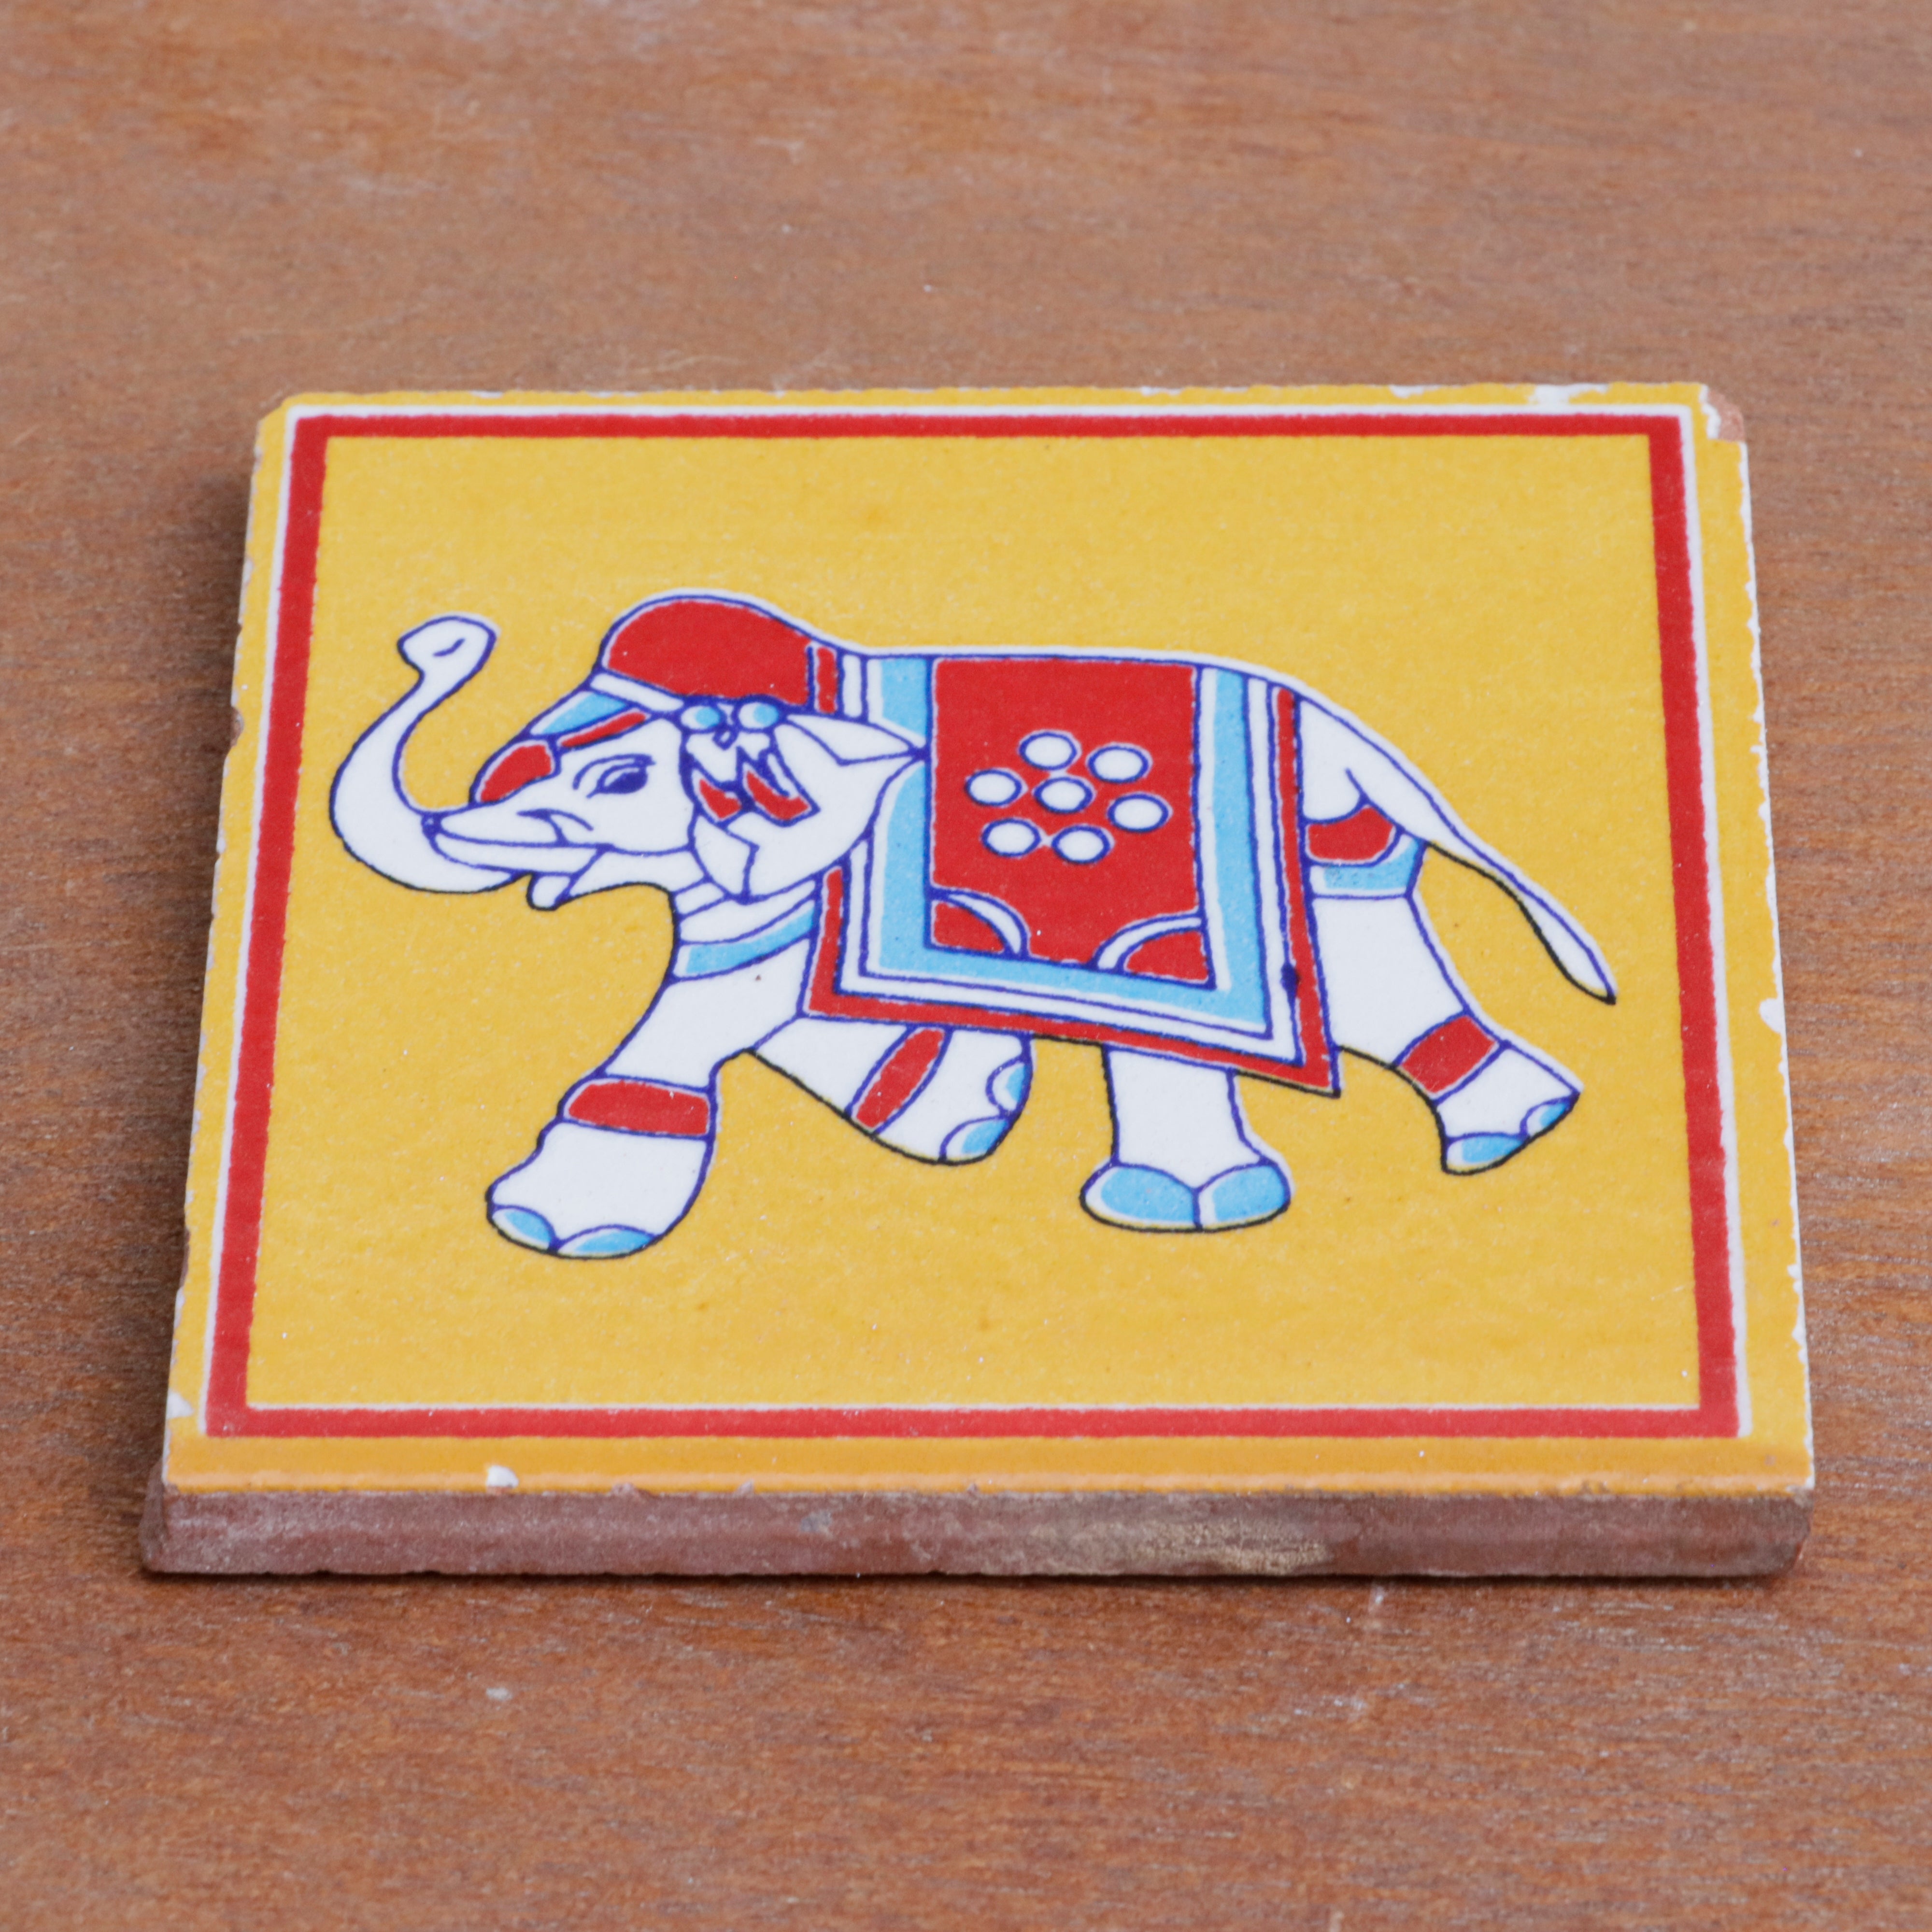 Indian Antique Style Elephant Designed Ceramic Square Tile Ceramic Tile